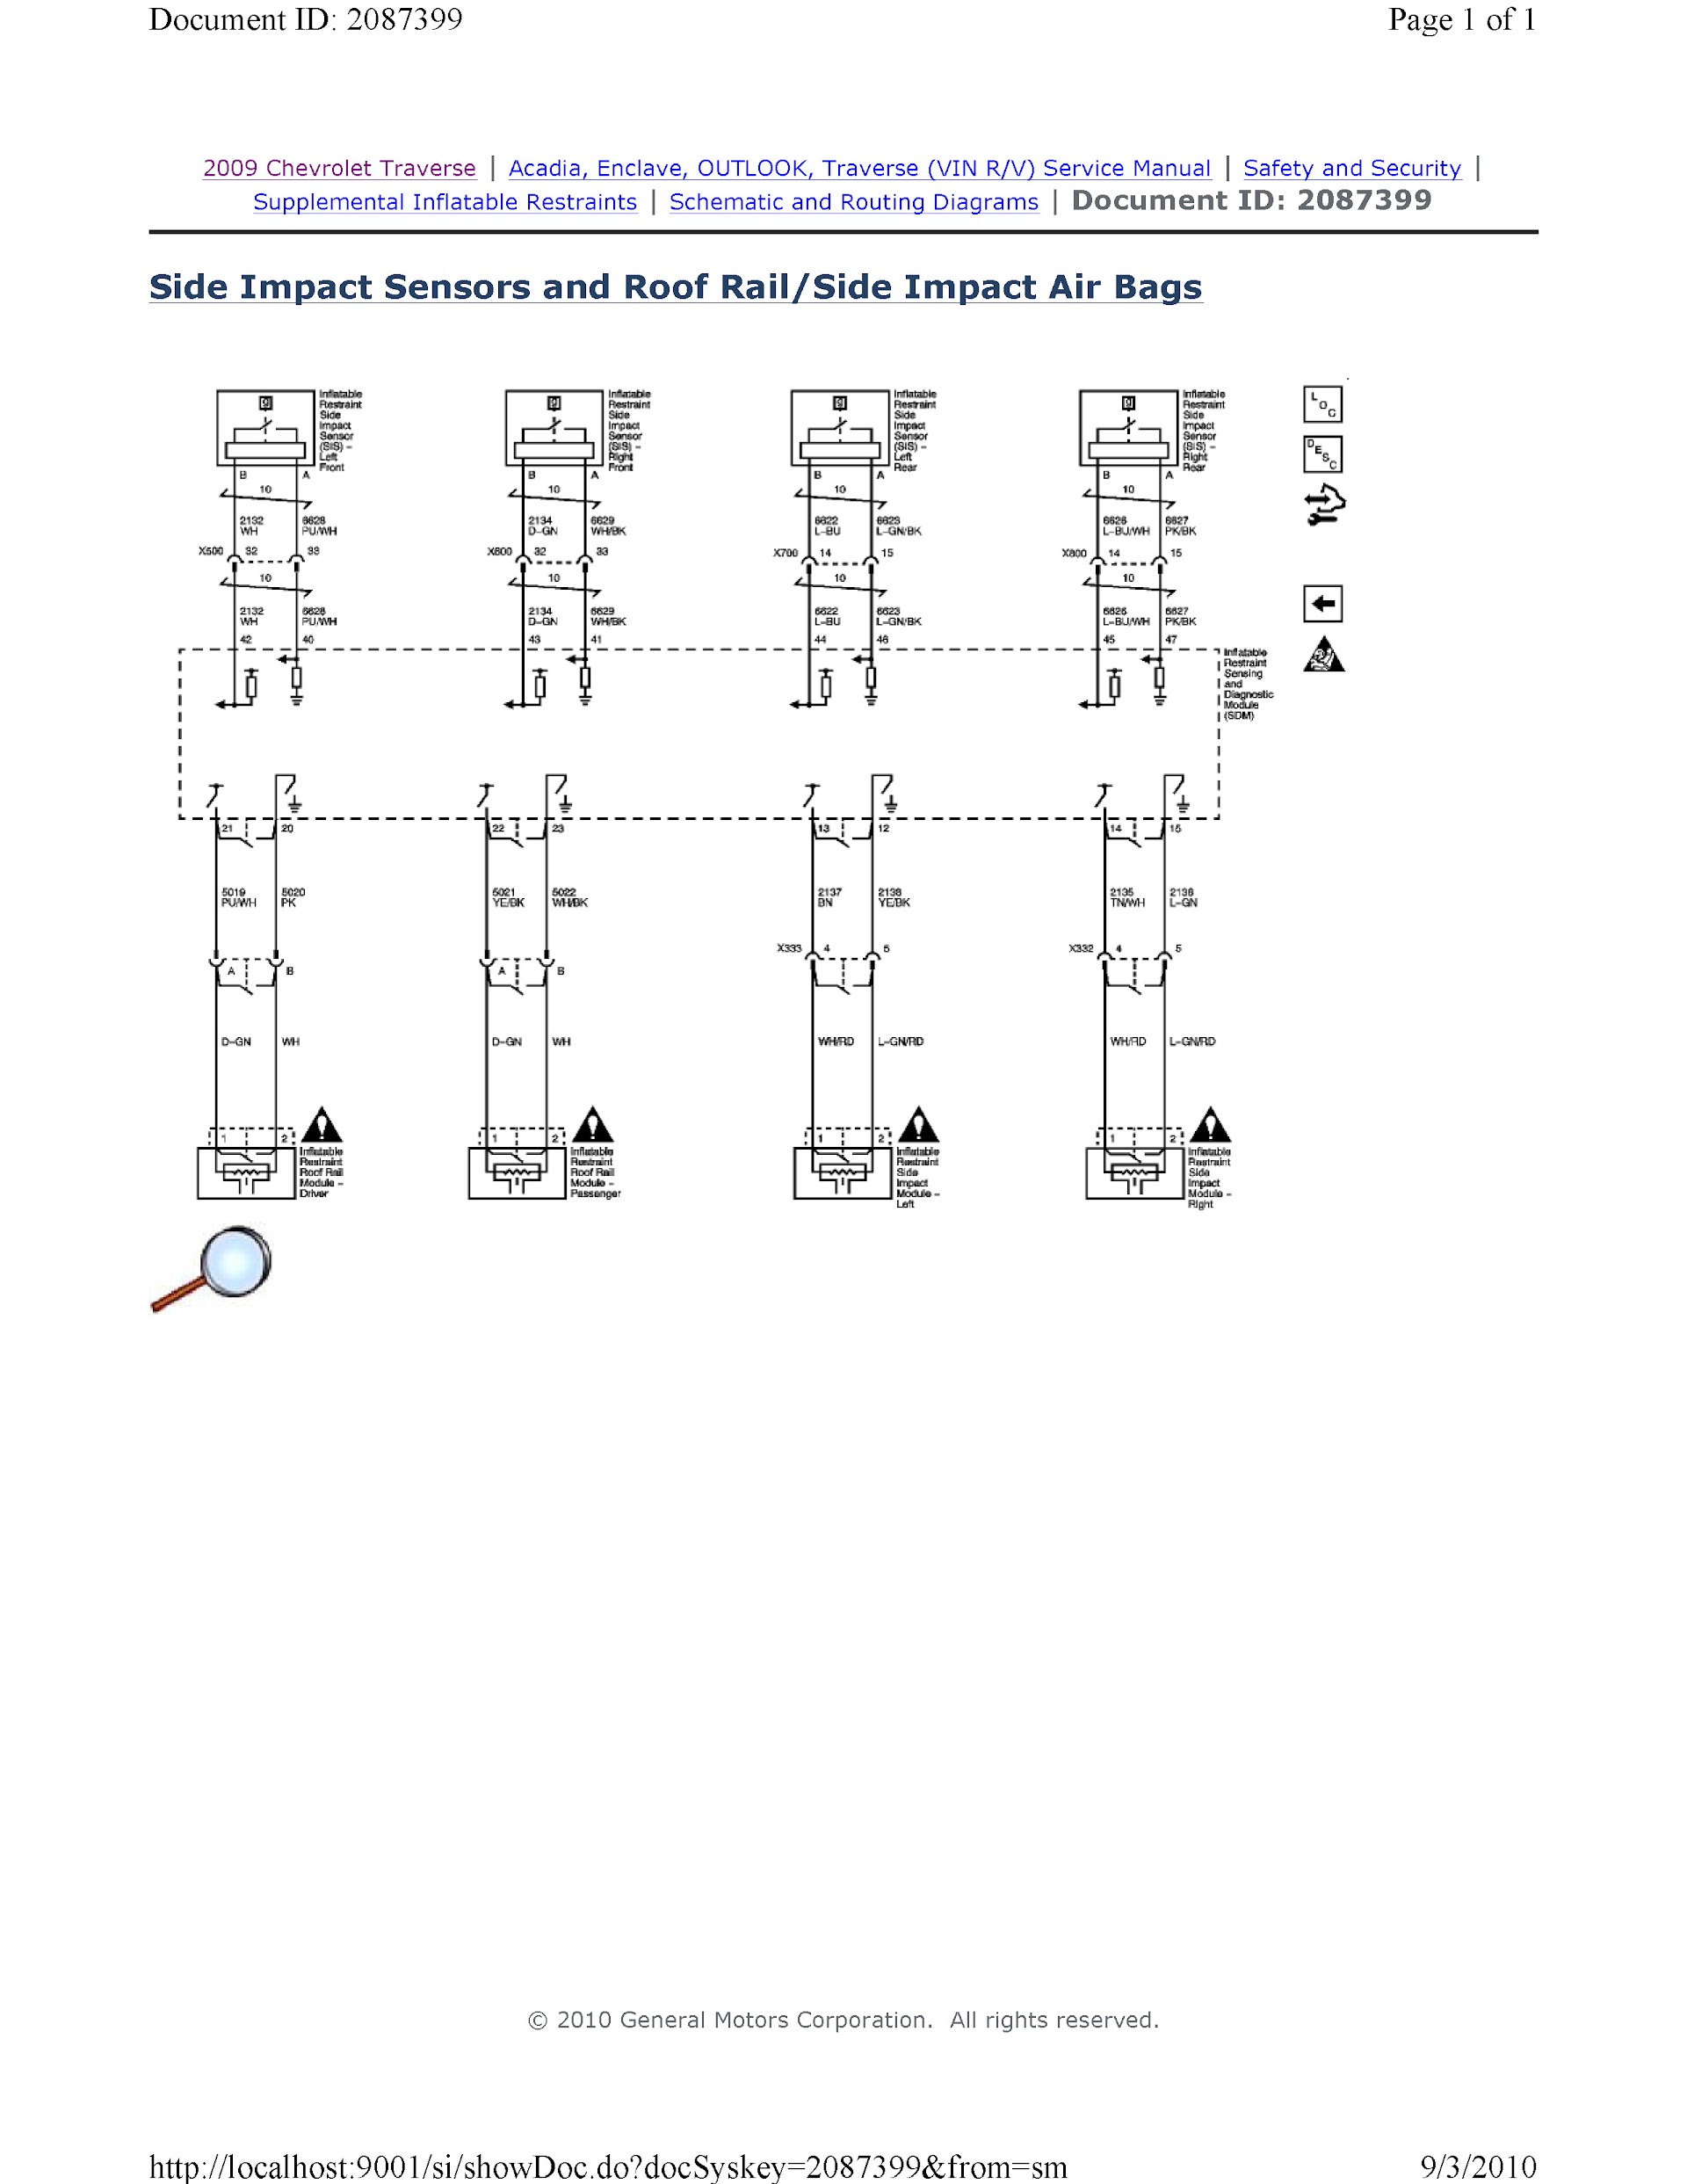 CONTENTS: 2009-2010 Chevrolet Traverse Repair Manual, Side Impact Sensors